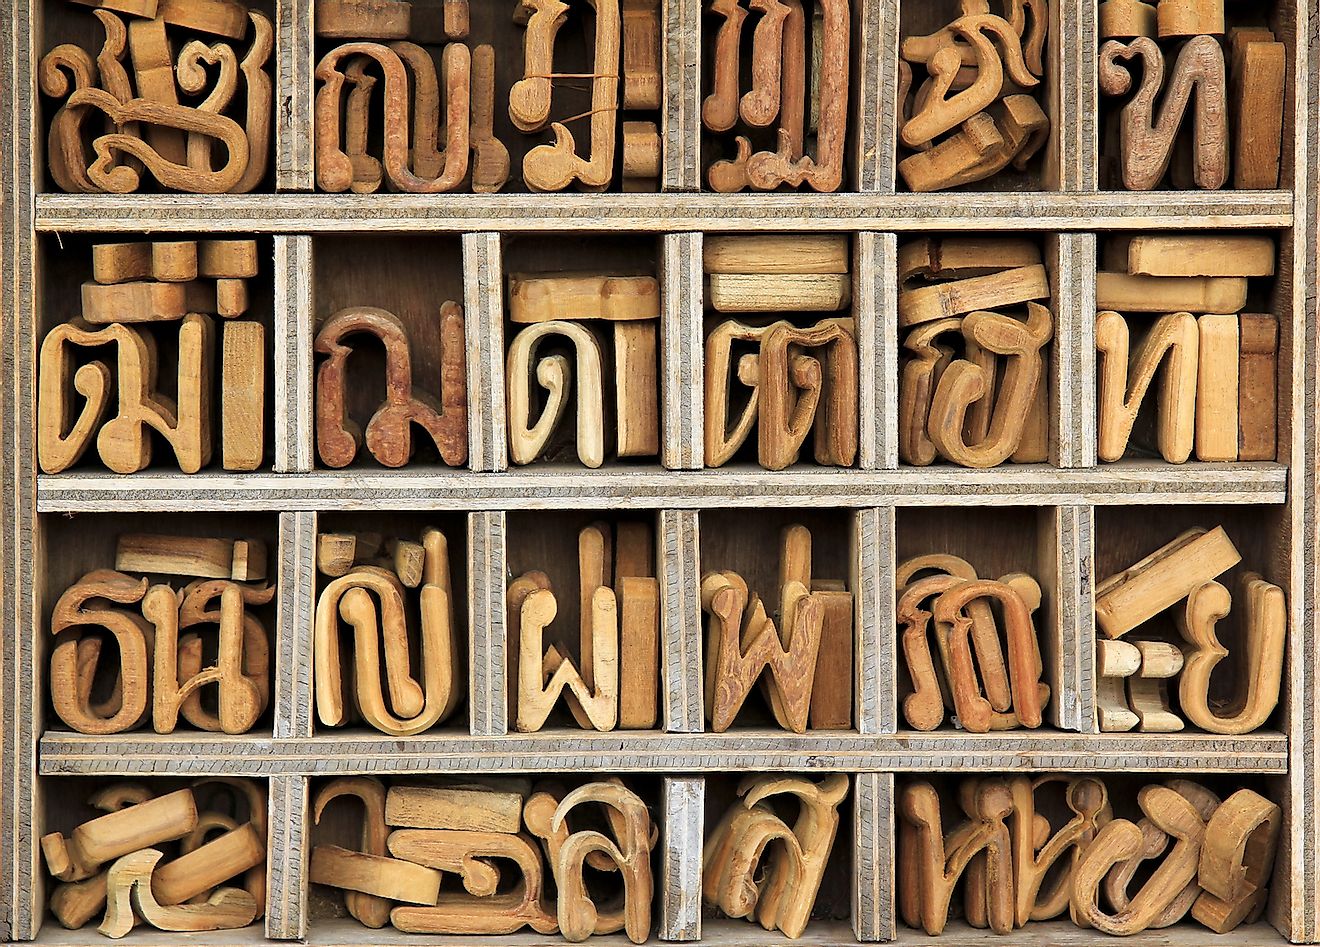 Thai language alphabet wooden blocks at a carpenter's studio in Thailand. Image credit: Shutterstock.com